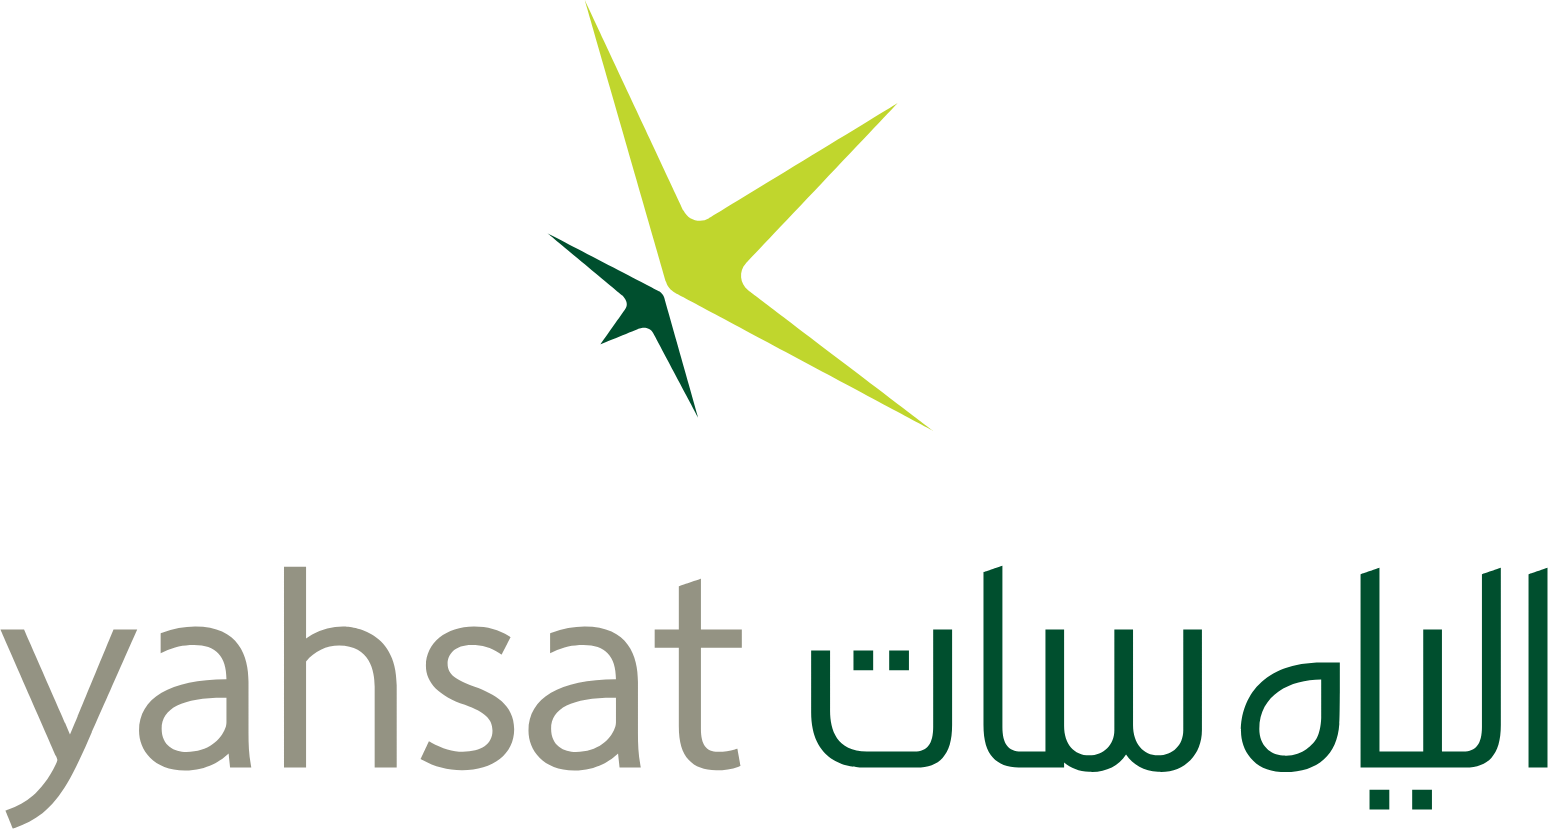 Al Yah Satellite Communications Company logo large (transparent PNG)